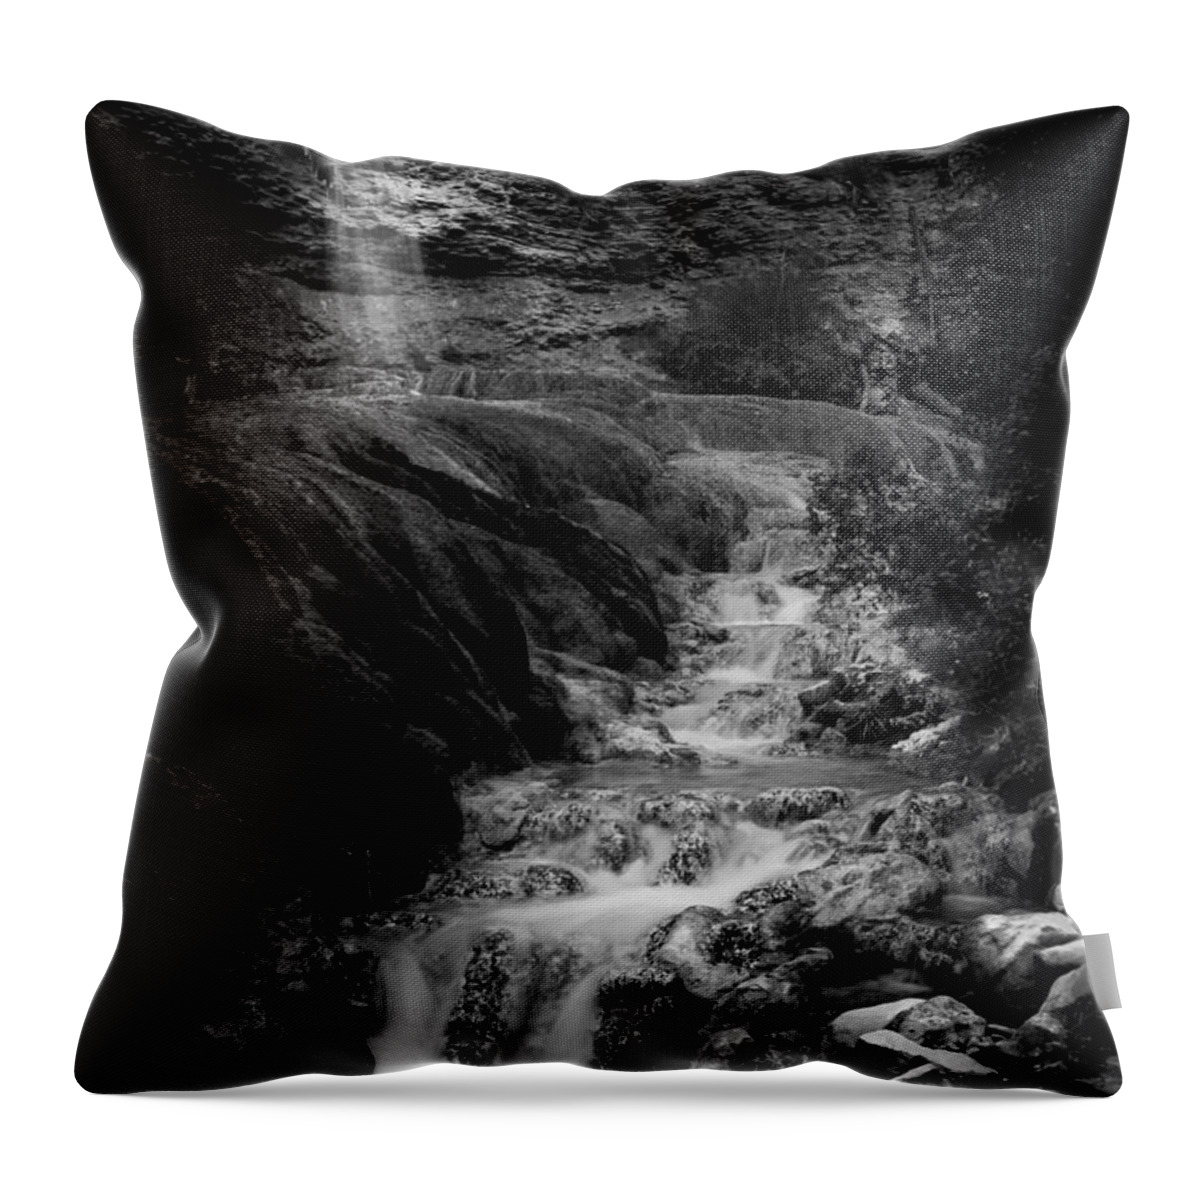 Invermere Throw Pillow featuring the digital art Fairmont Waterfall by Eduardo Tavares